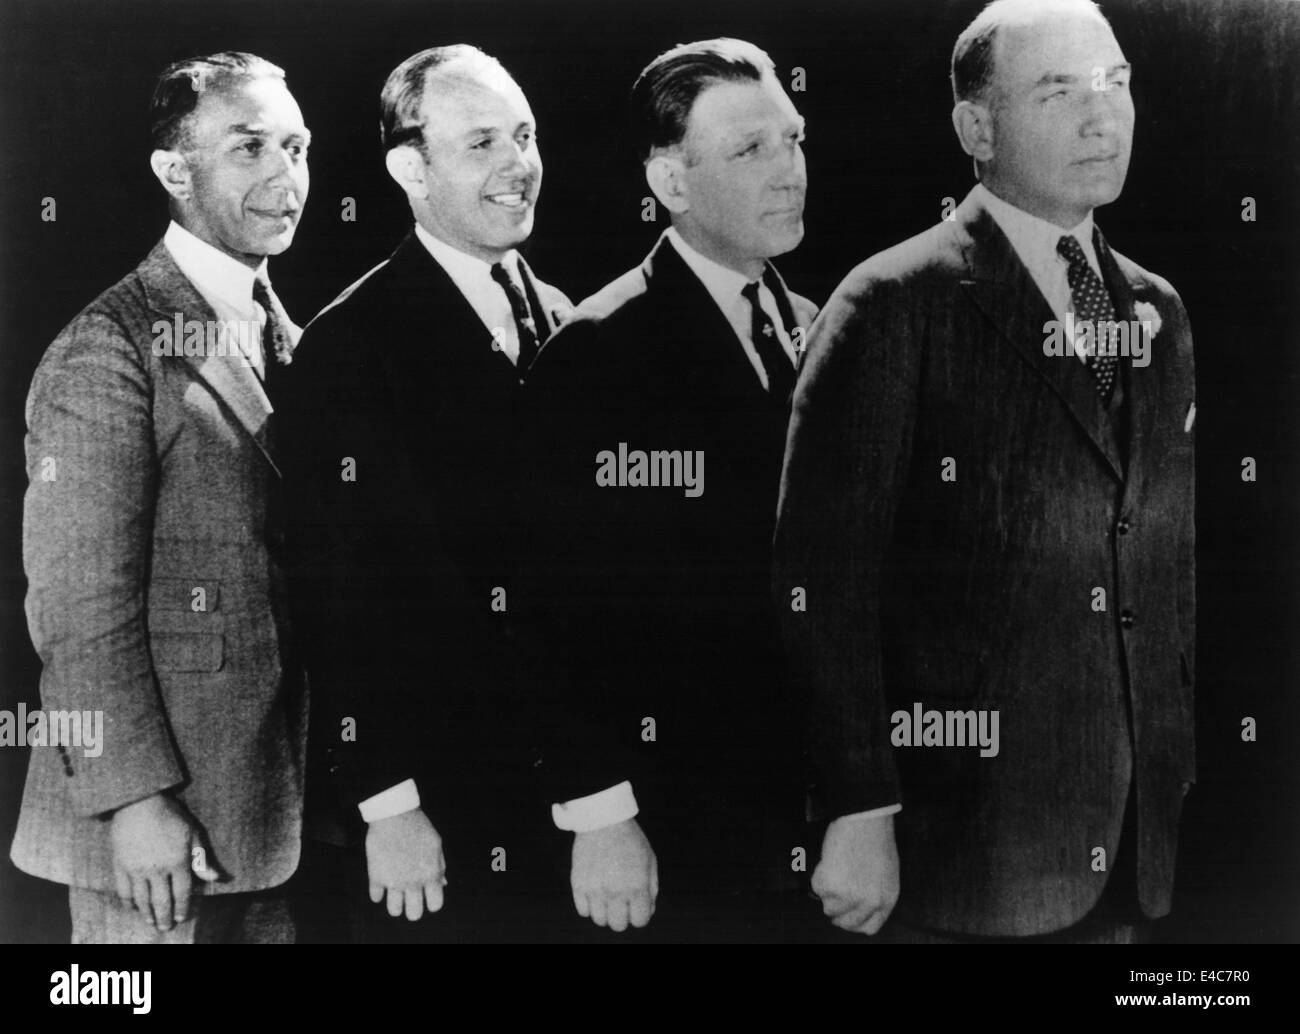 Warner Brothers, Harry, Jack, Sam, und Albert, Film Führungskräfte bei Warner Brothers Studios, Portrait, ca. 1920 Stockfoto